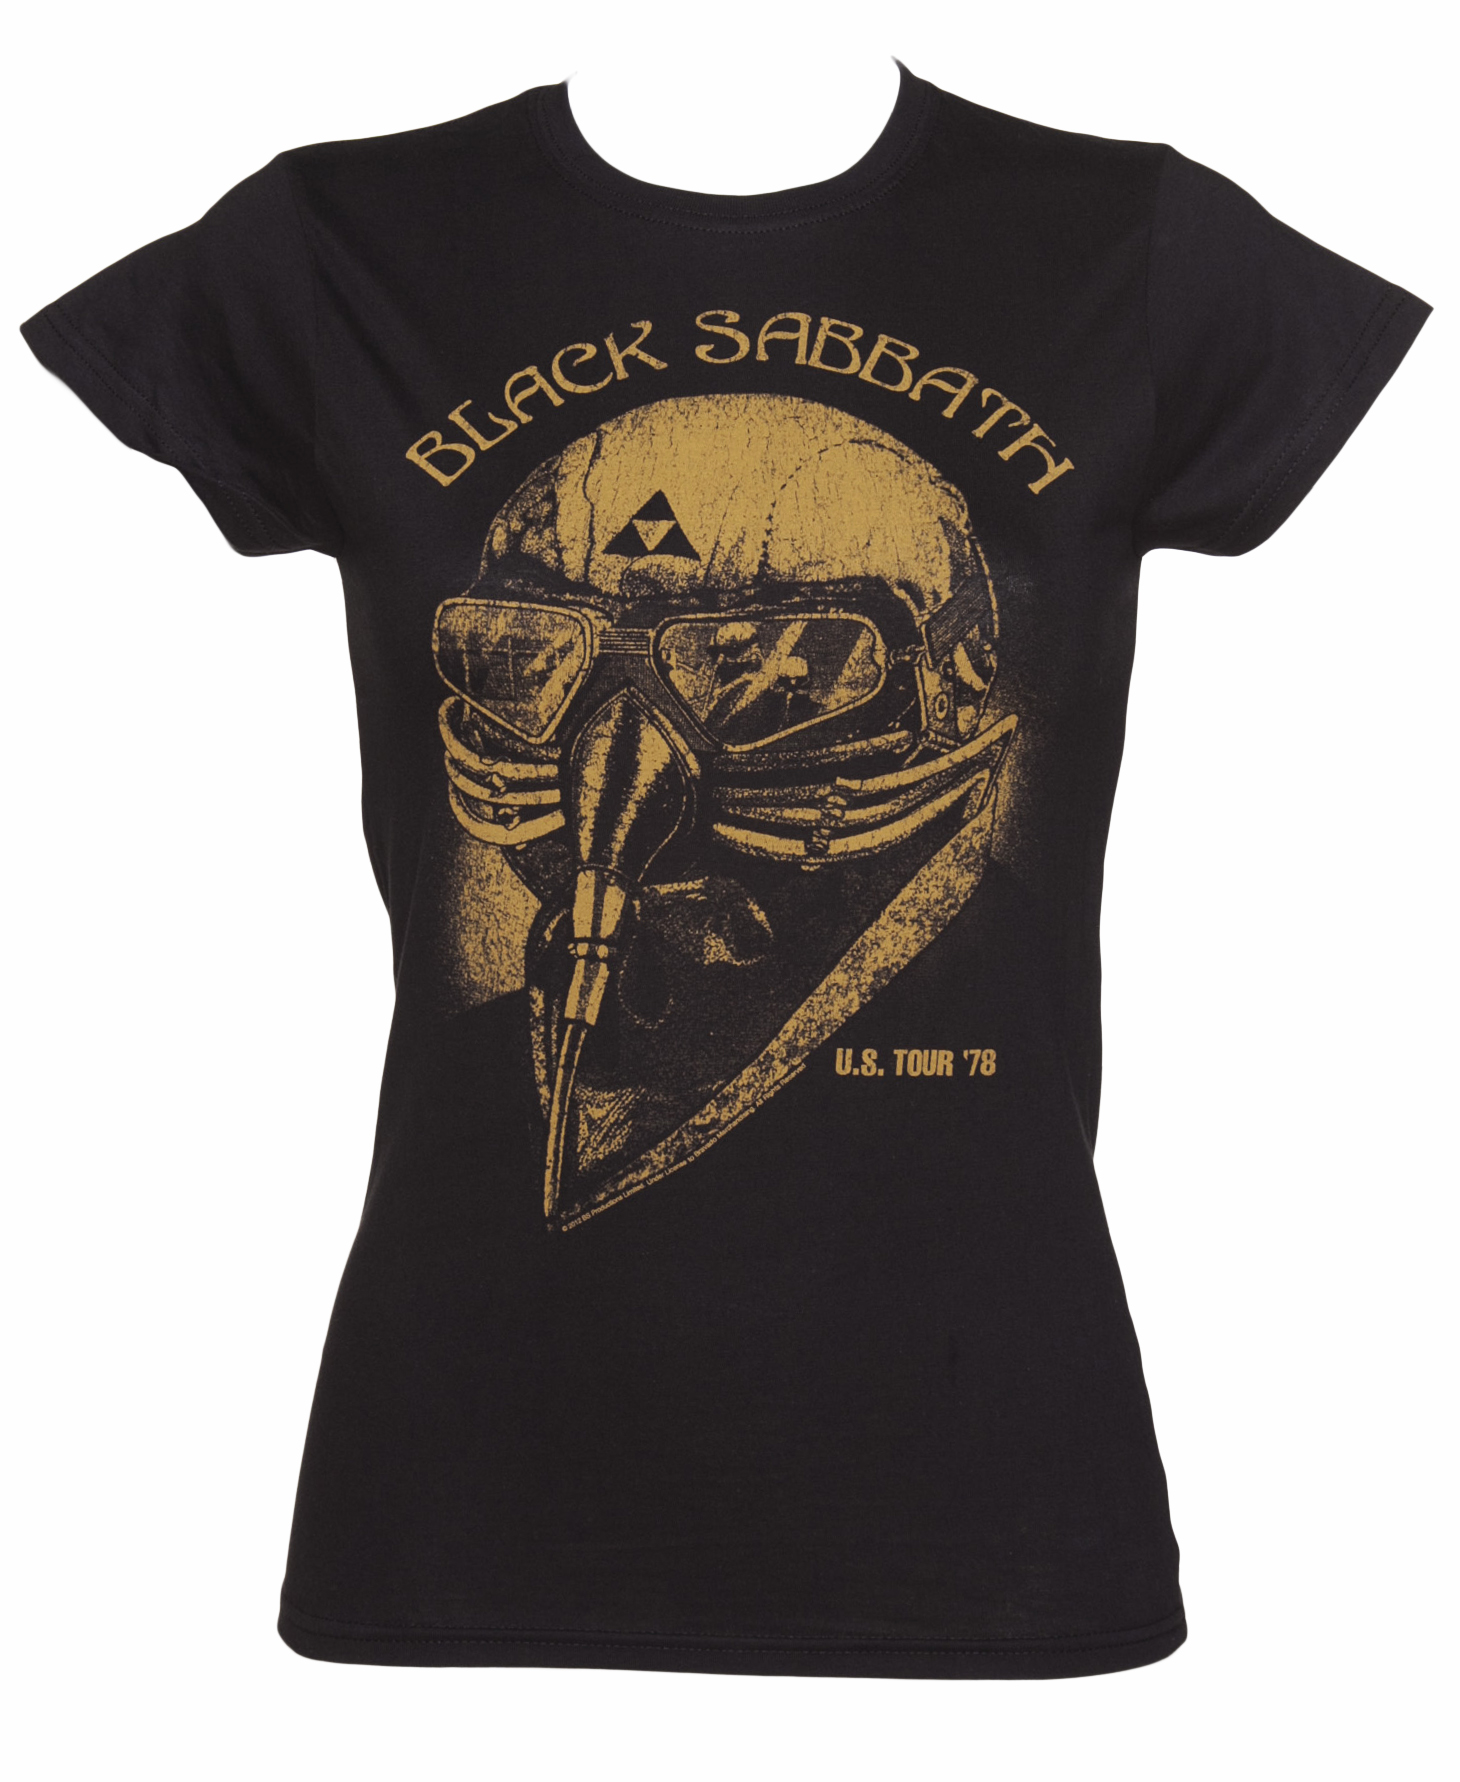 Black Sabbath Tour T-Shirt